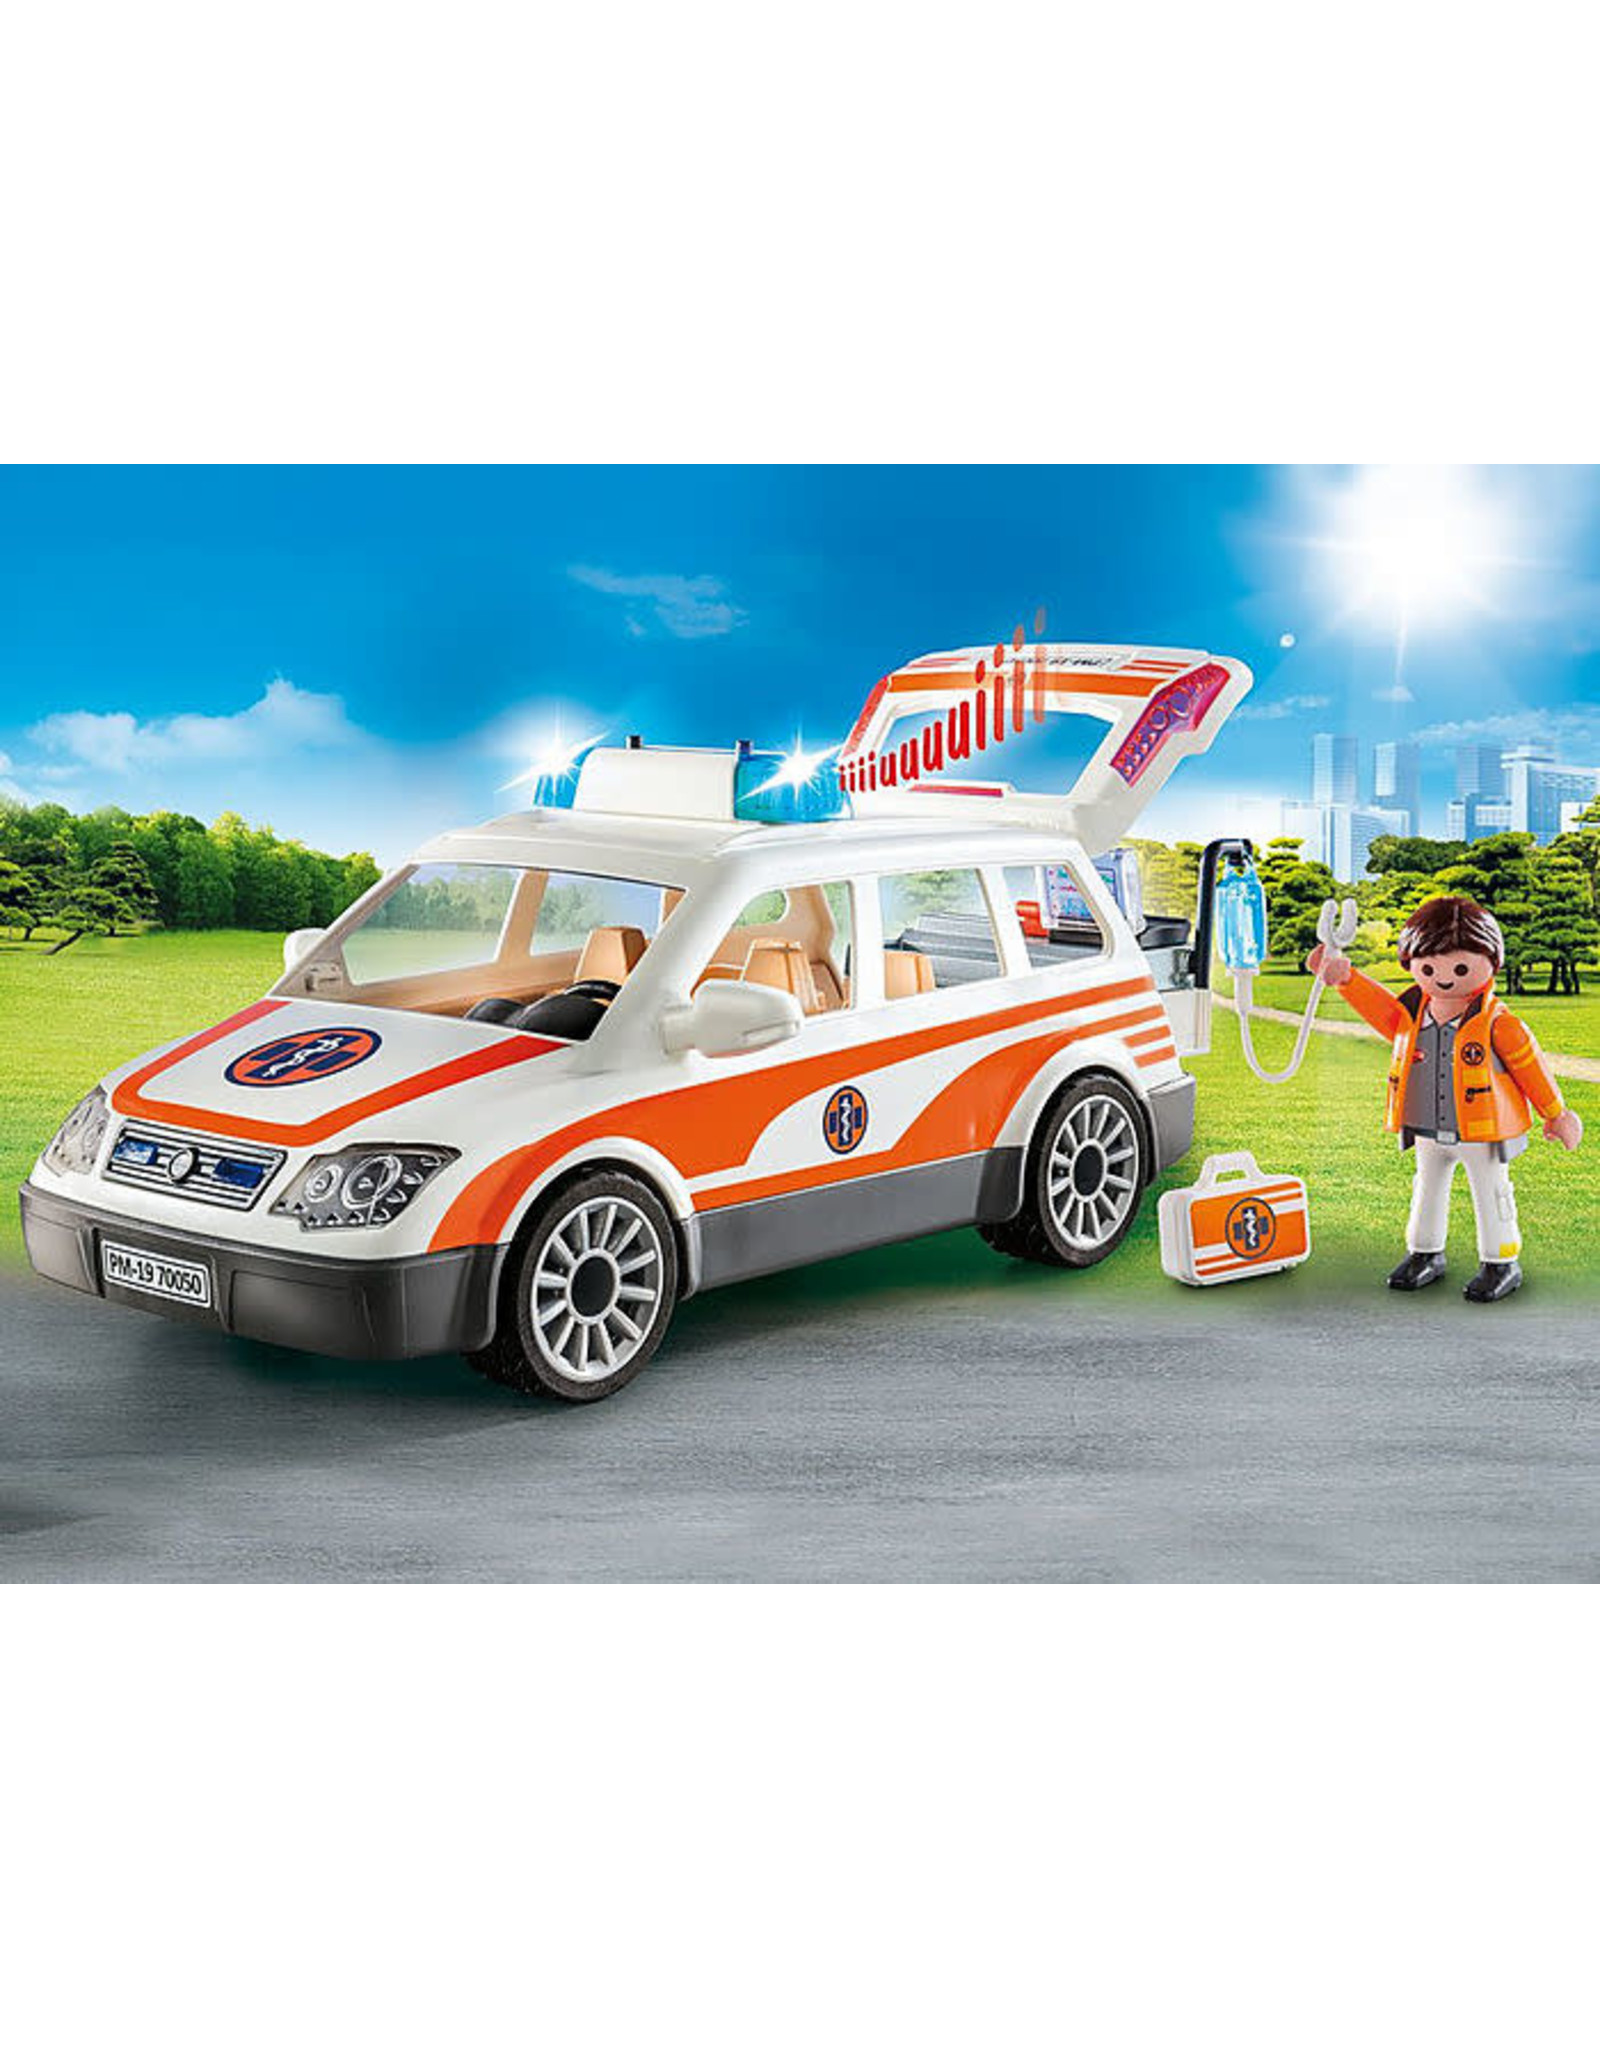 Playmobil Emergency Car